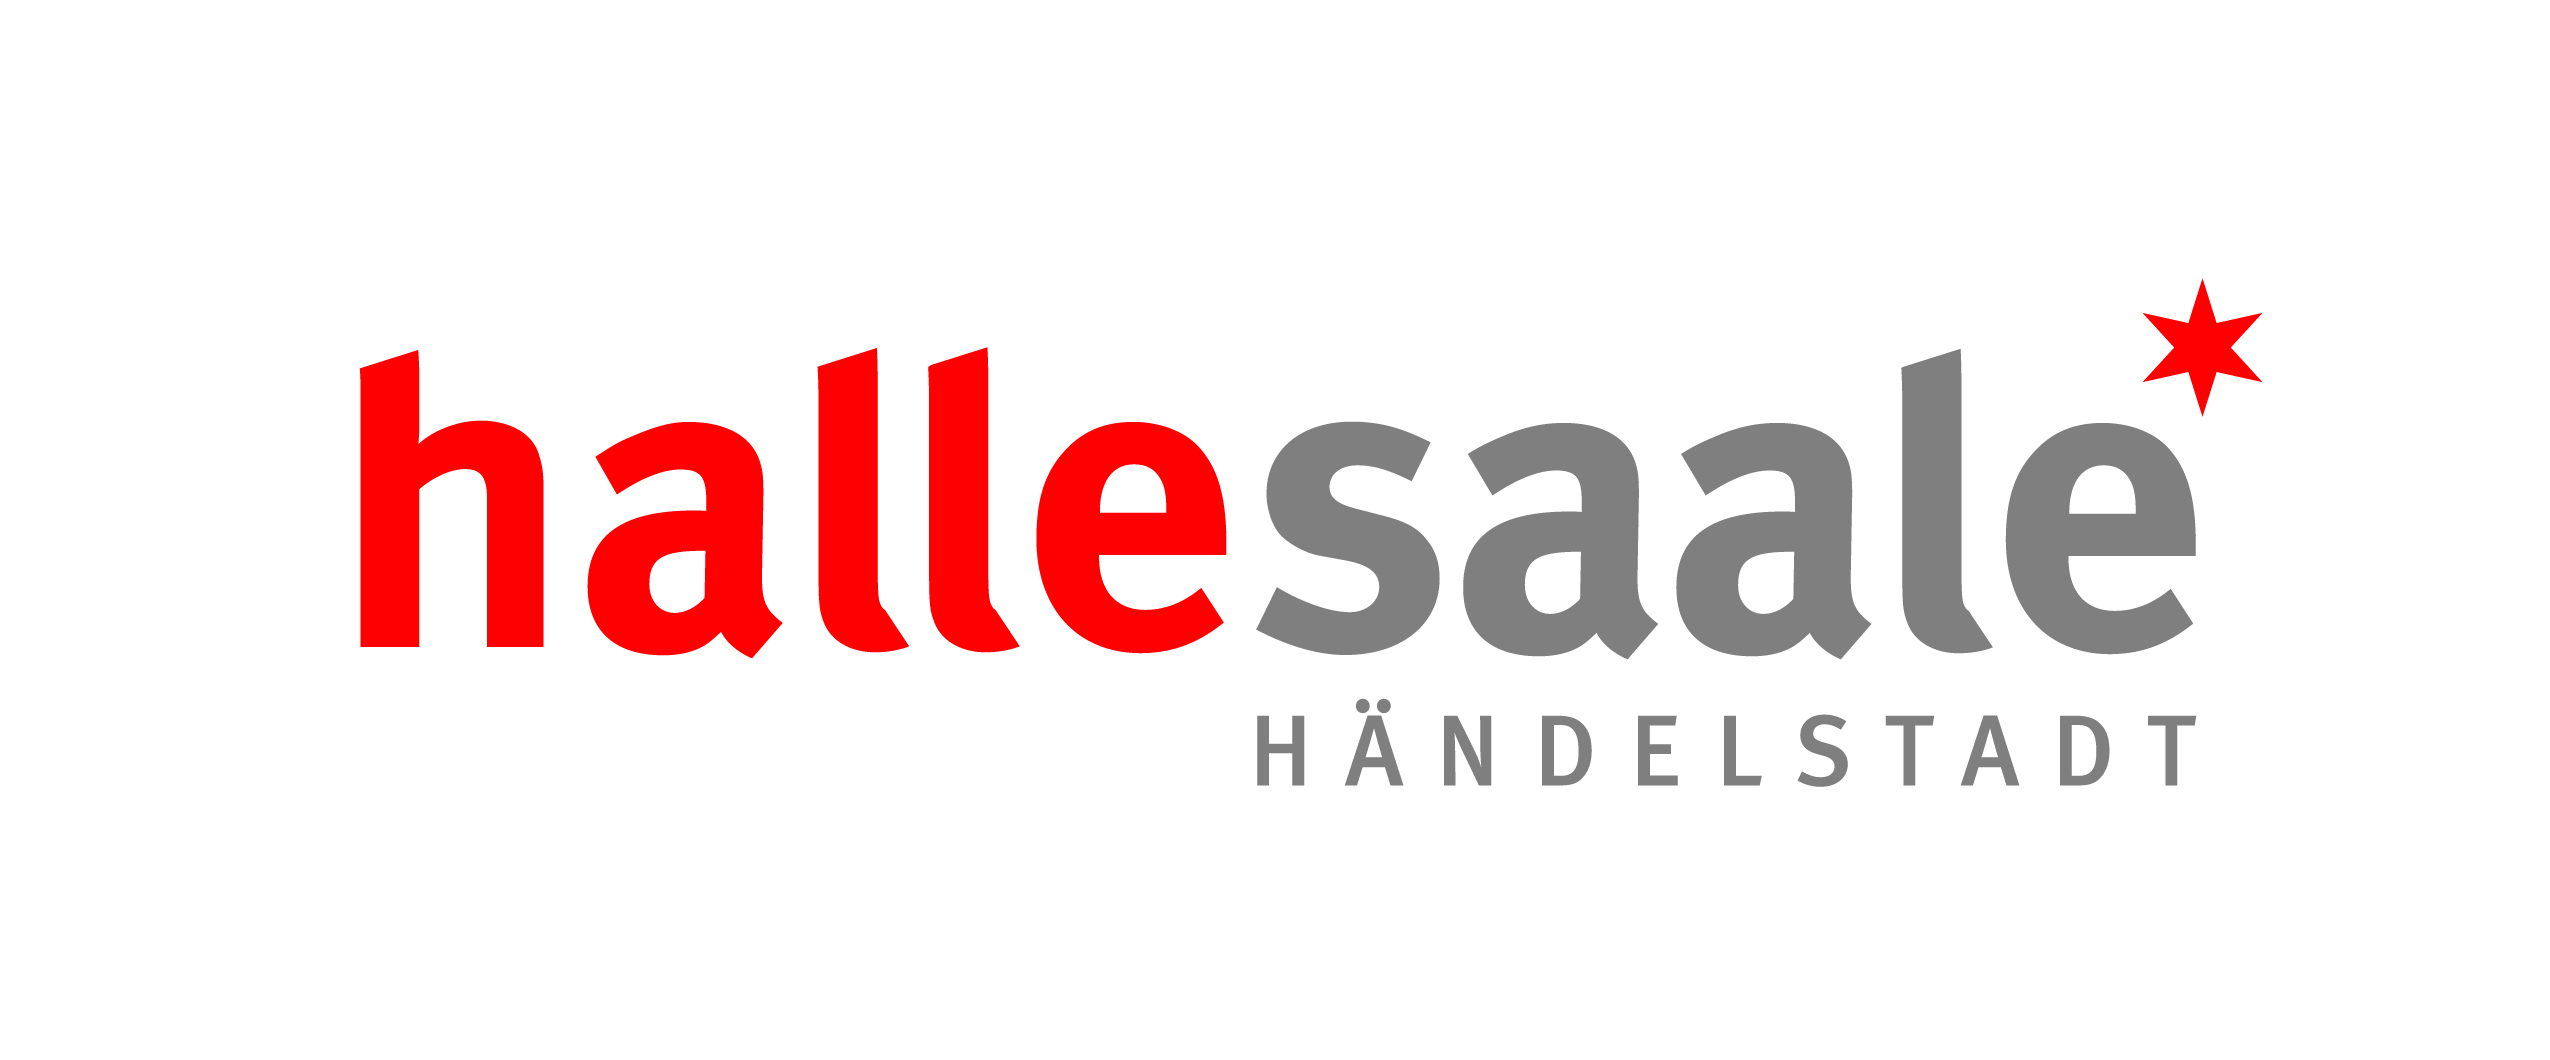 stadt-halle - Saalebulls Partner